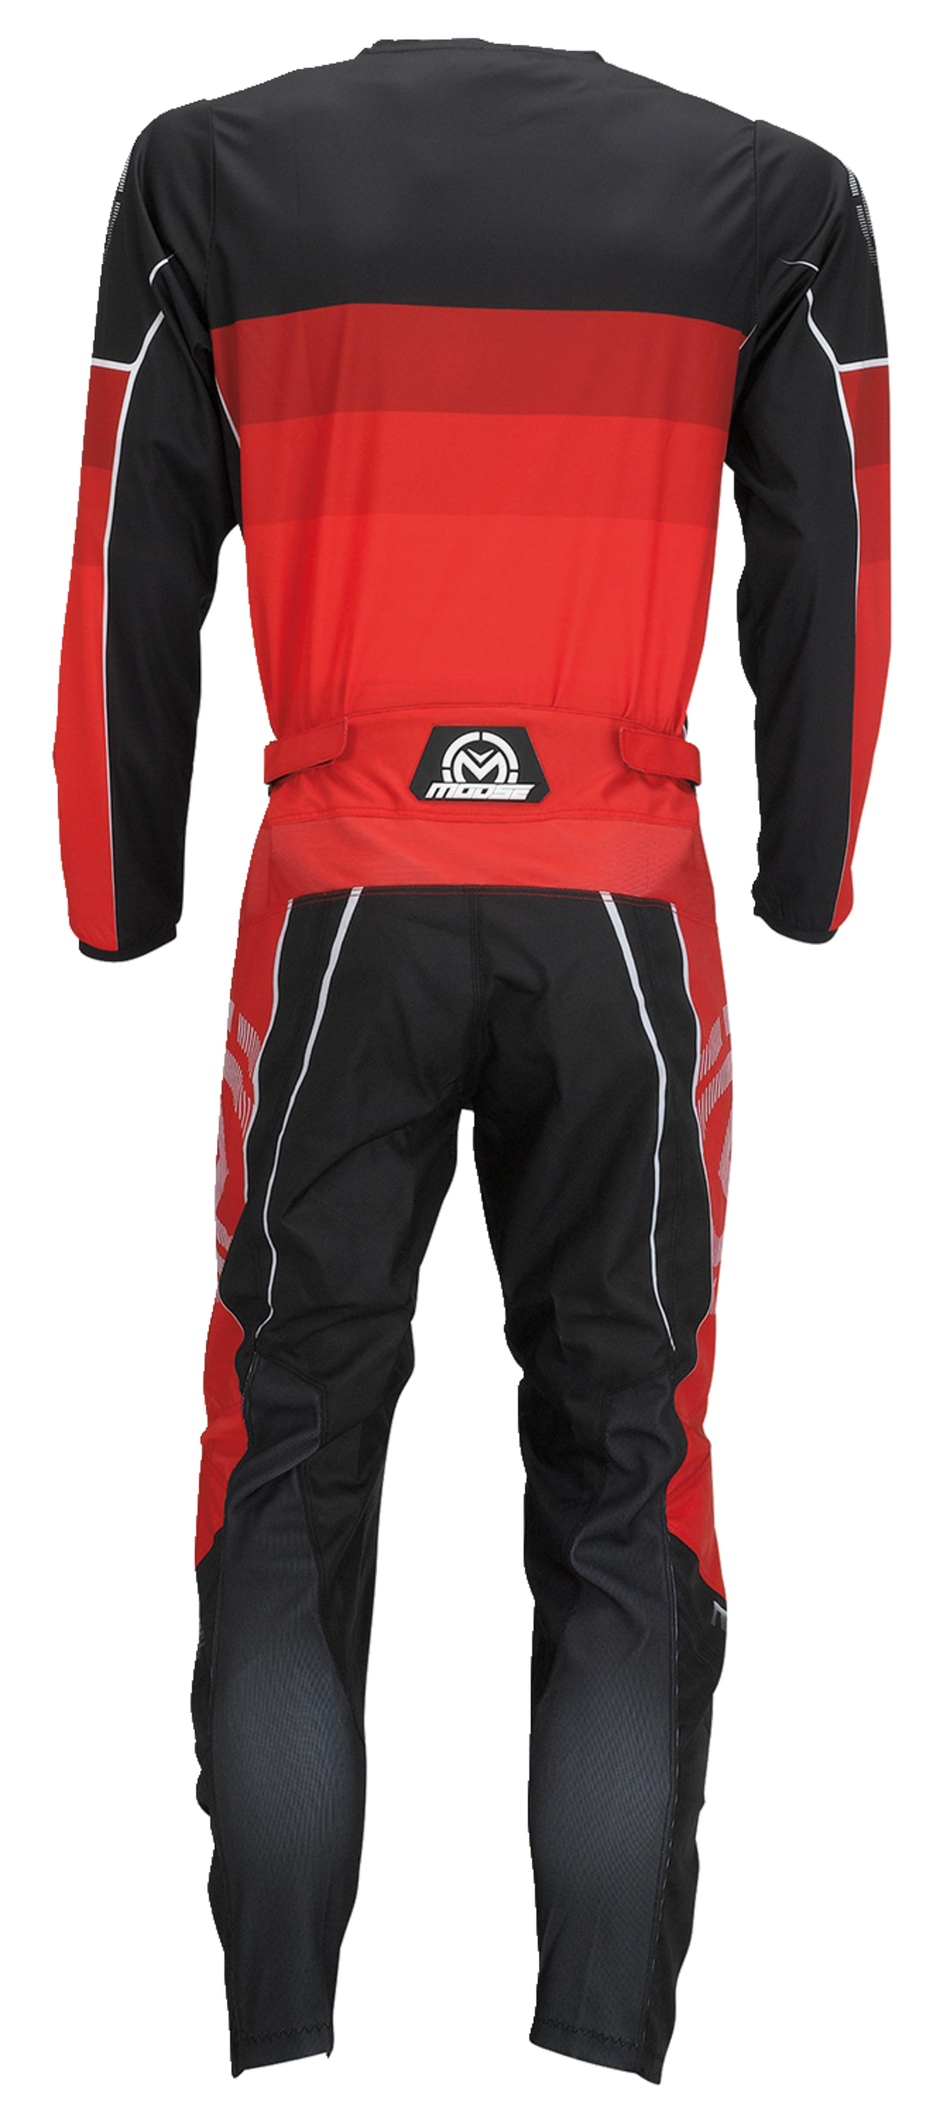 MOOSE RACING Qualifier® Jersey - Red/Black - 3XL 2910-7185